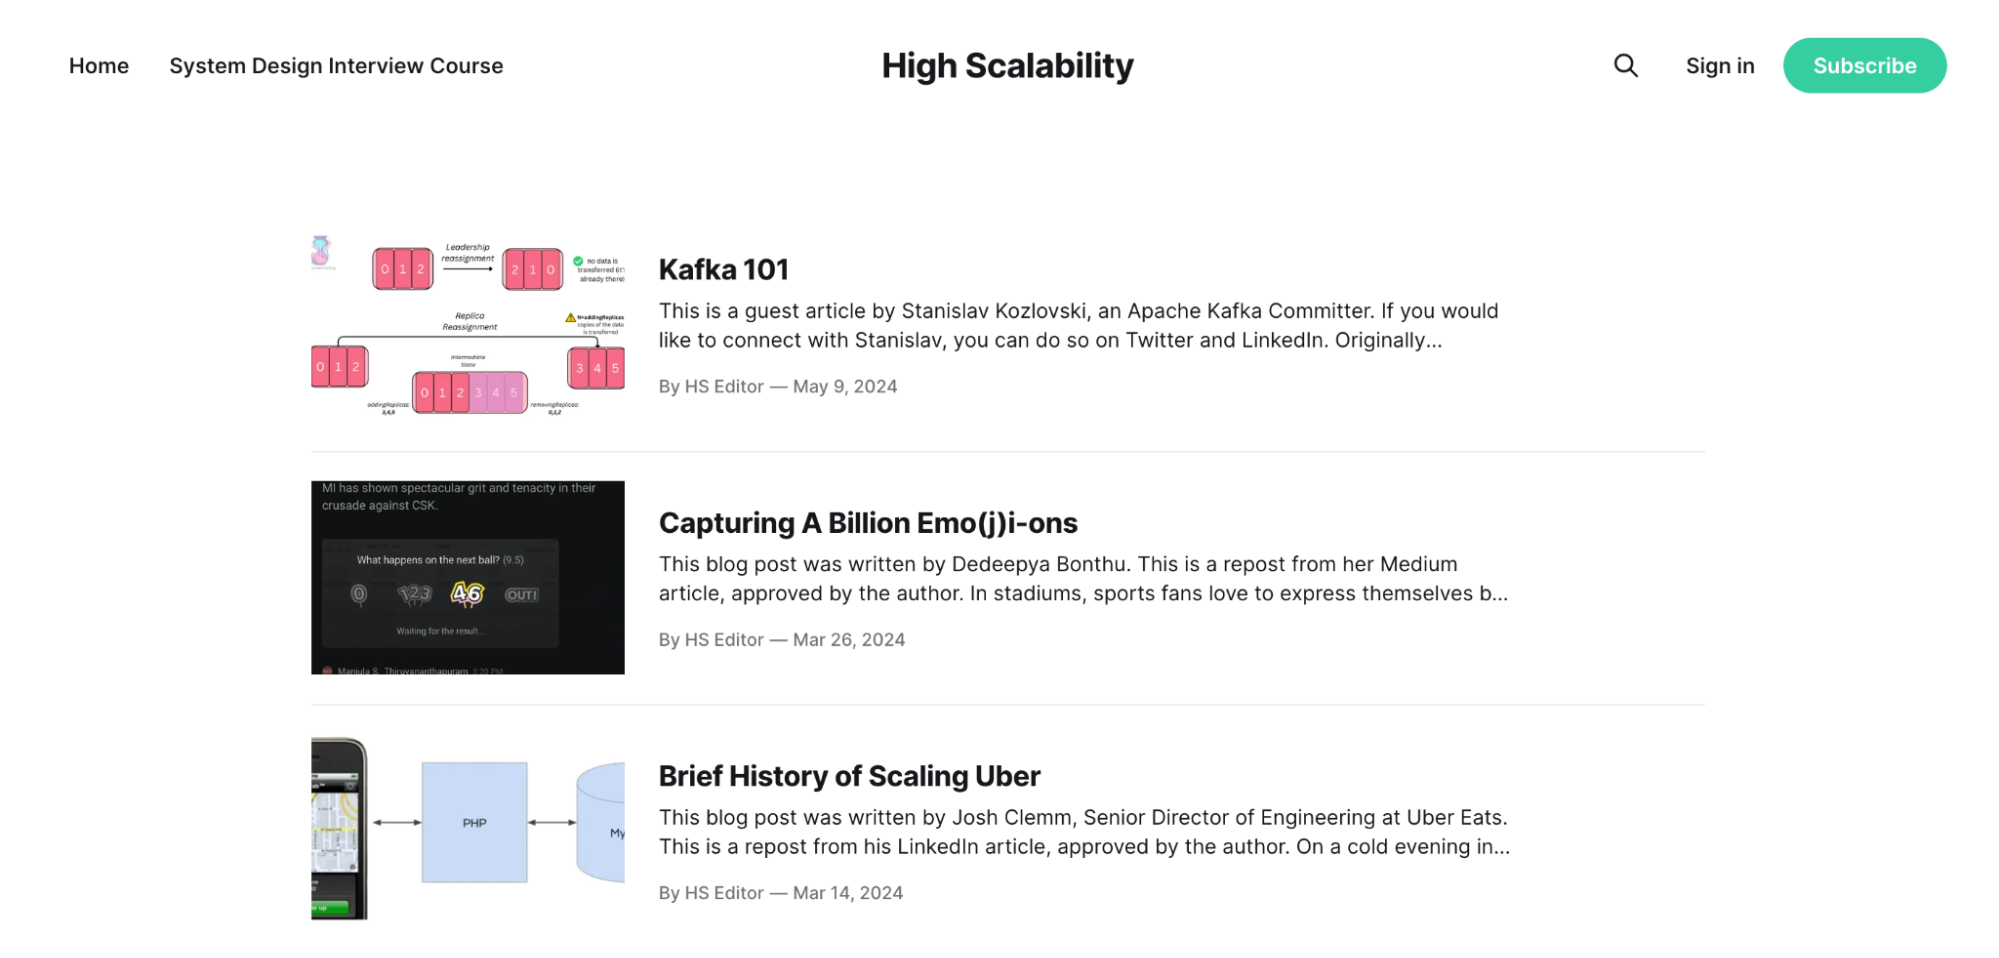 High Scalability Blog